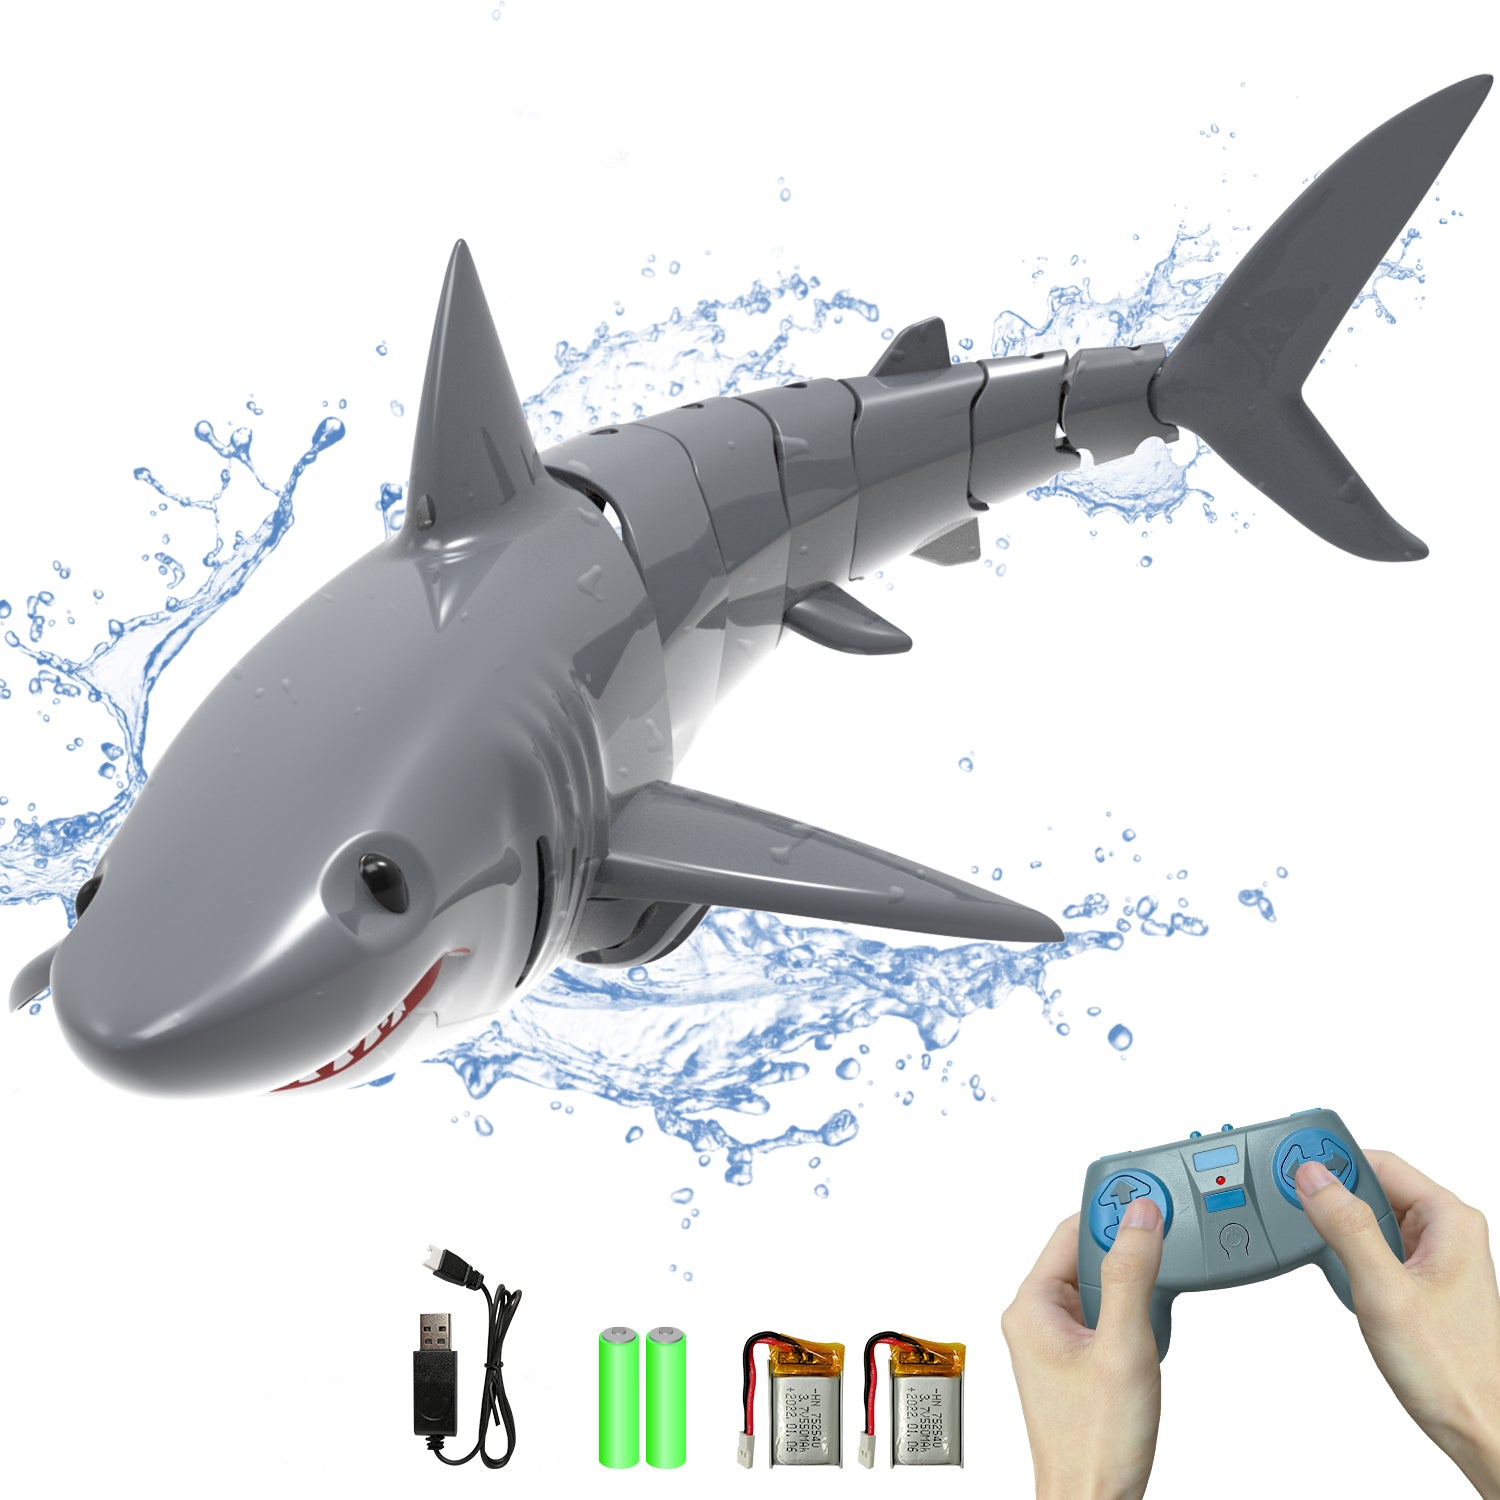 Stemtron RC Shark Toys Great Gift for Kids